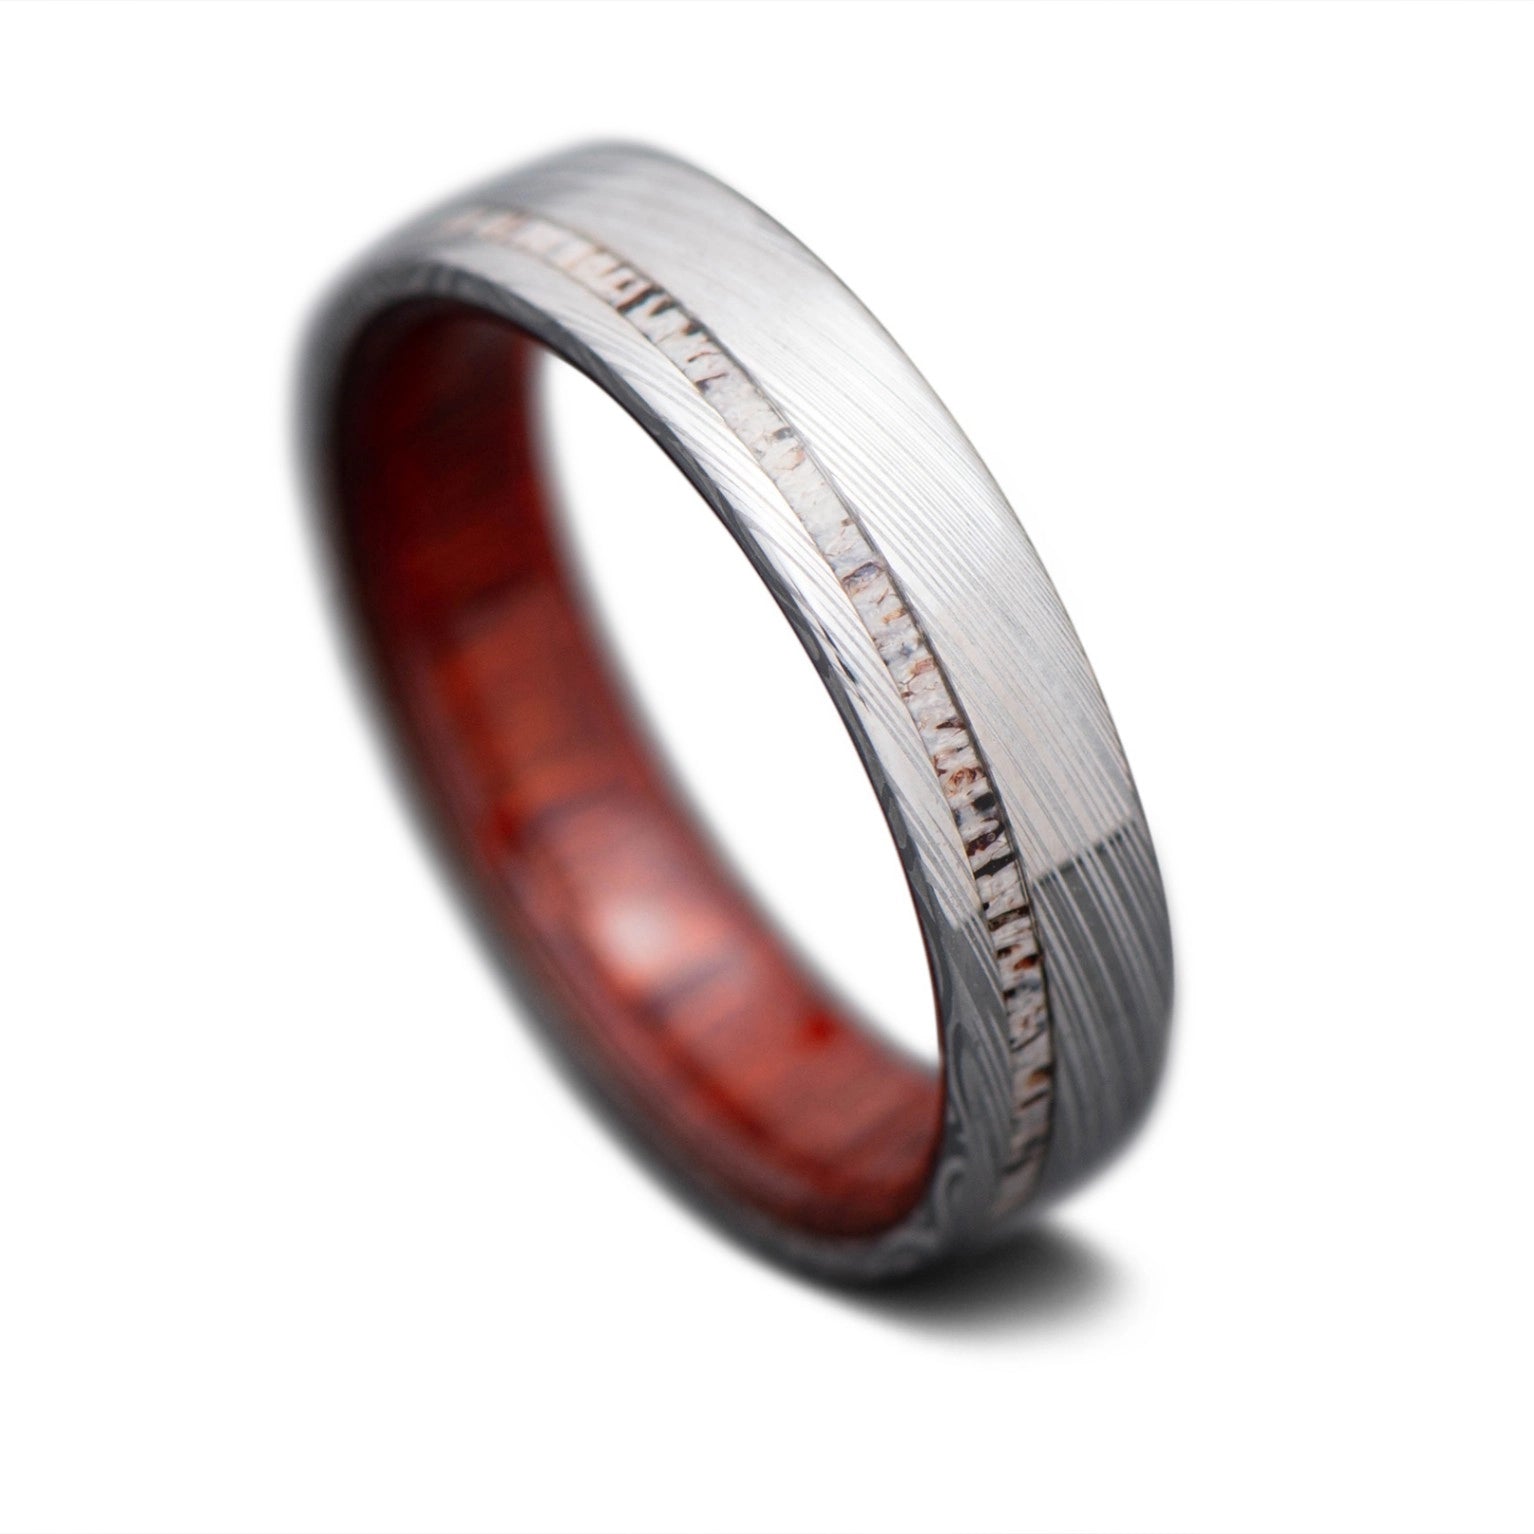 Heimskringla Ring with Deer Antler inlay and Bloodwood inner sleeve, 5mm -THE MEMOIR